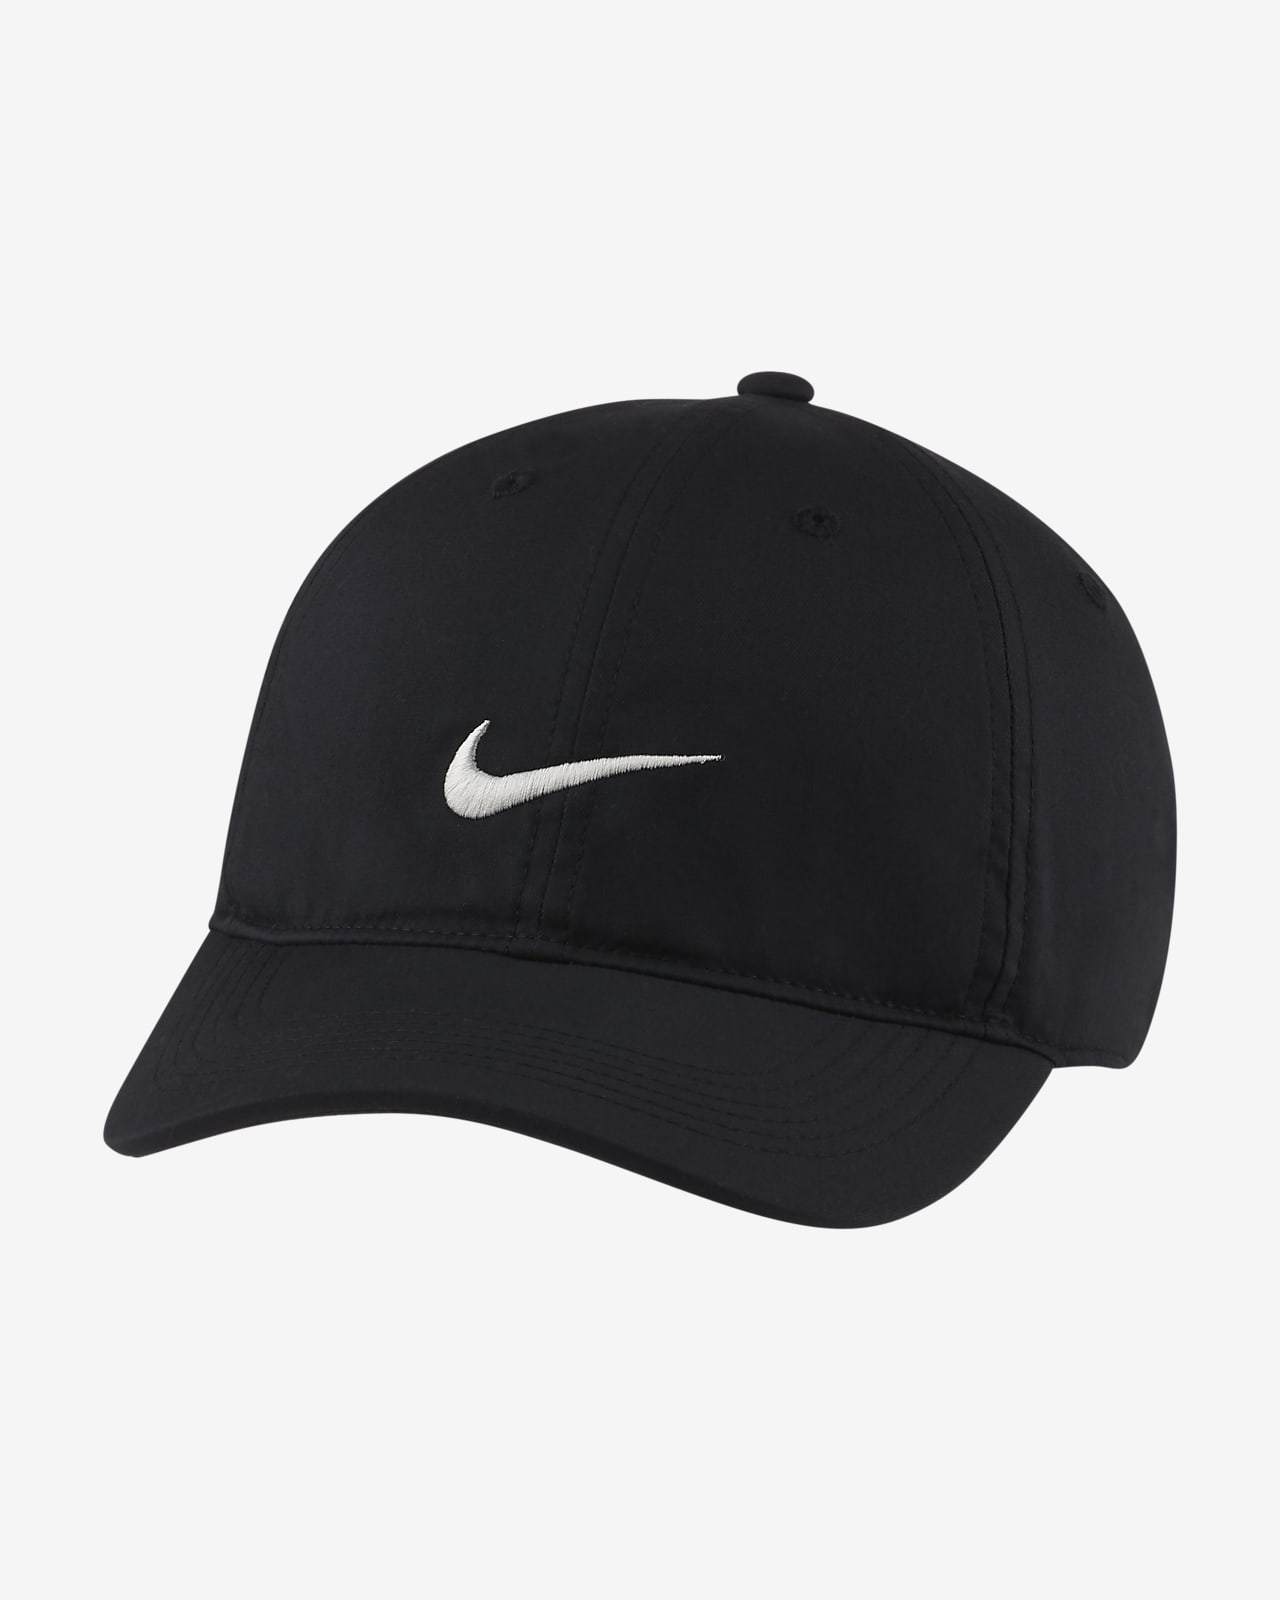 Nike AeroBill Heritage86 Player Golf Hat